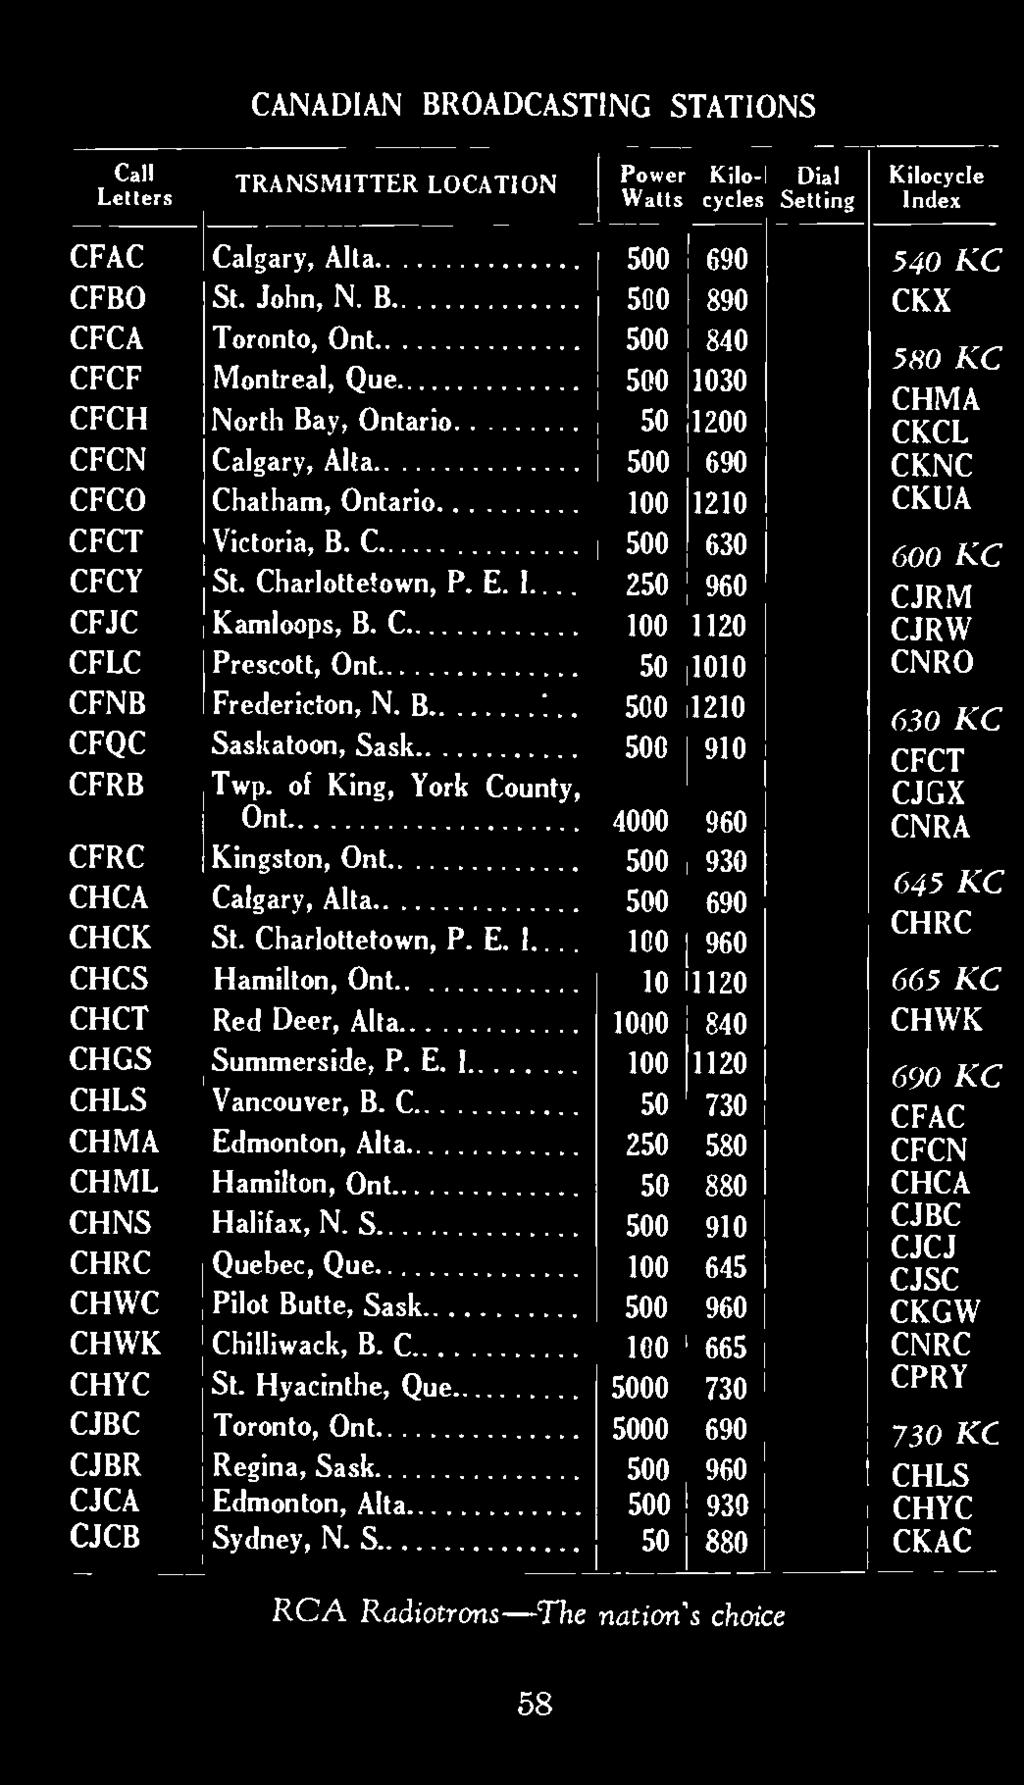 Charlottetown, P. E. I 250 960 CJRM CFJC Kamloops, B. C. 1120 CJRW CFLC Prescott, Ont.. 50 1010 CNRO CFNB Fredericton, N. B. 1210 CFQC Saskatoon, Sask.. 910 630 KC CFCT CJGX CNRA CFRB Twp.